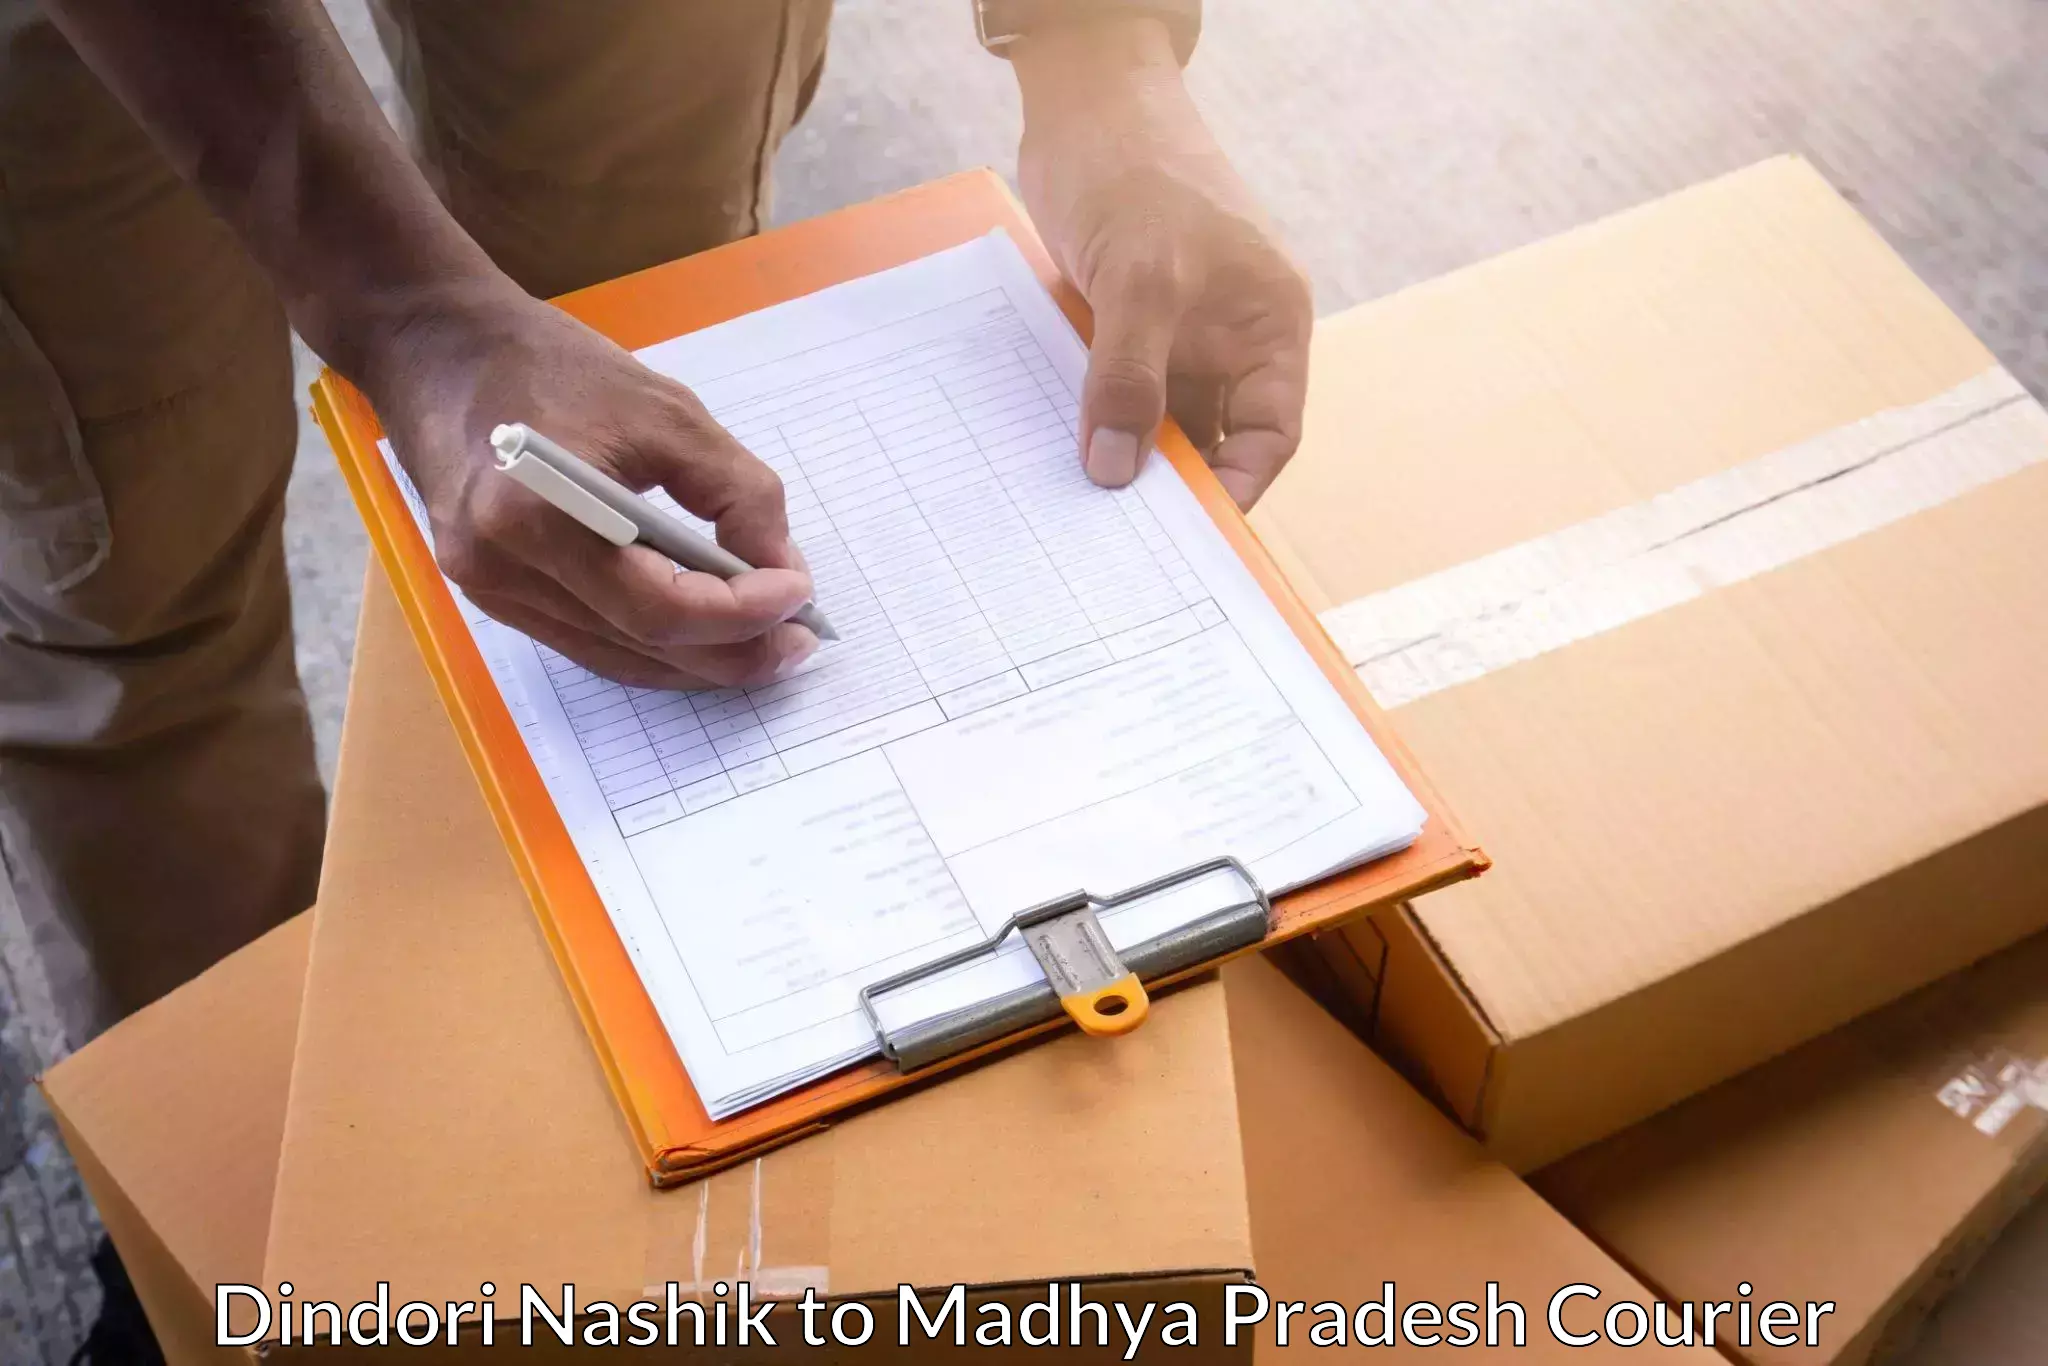 Modern delivery technologies Dindori Nashik to Maheshwar